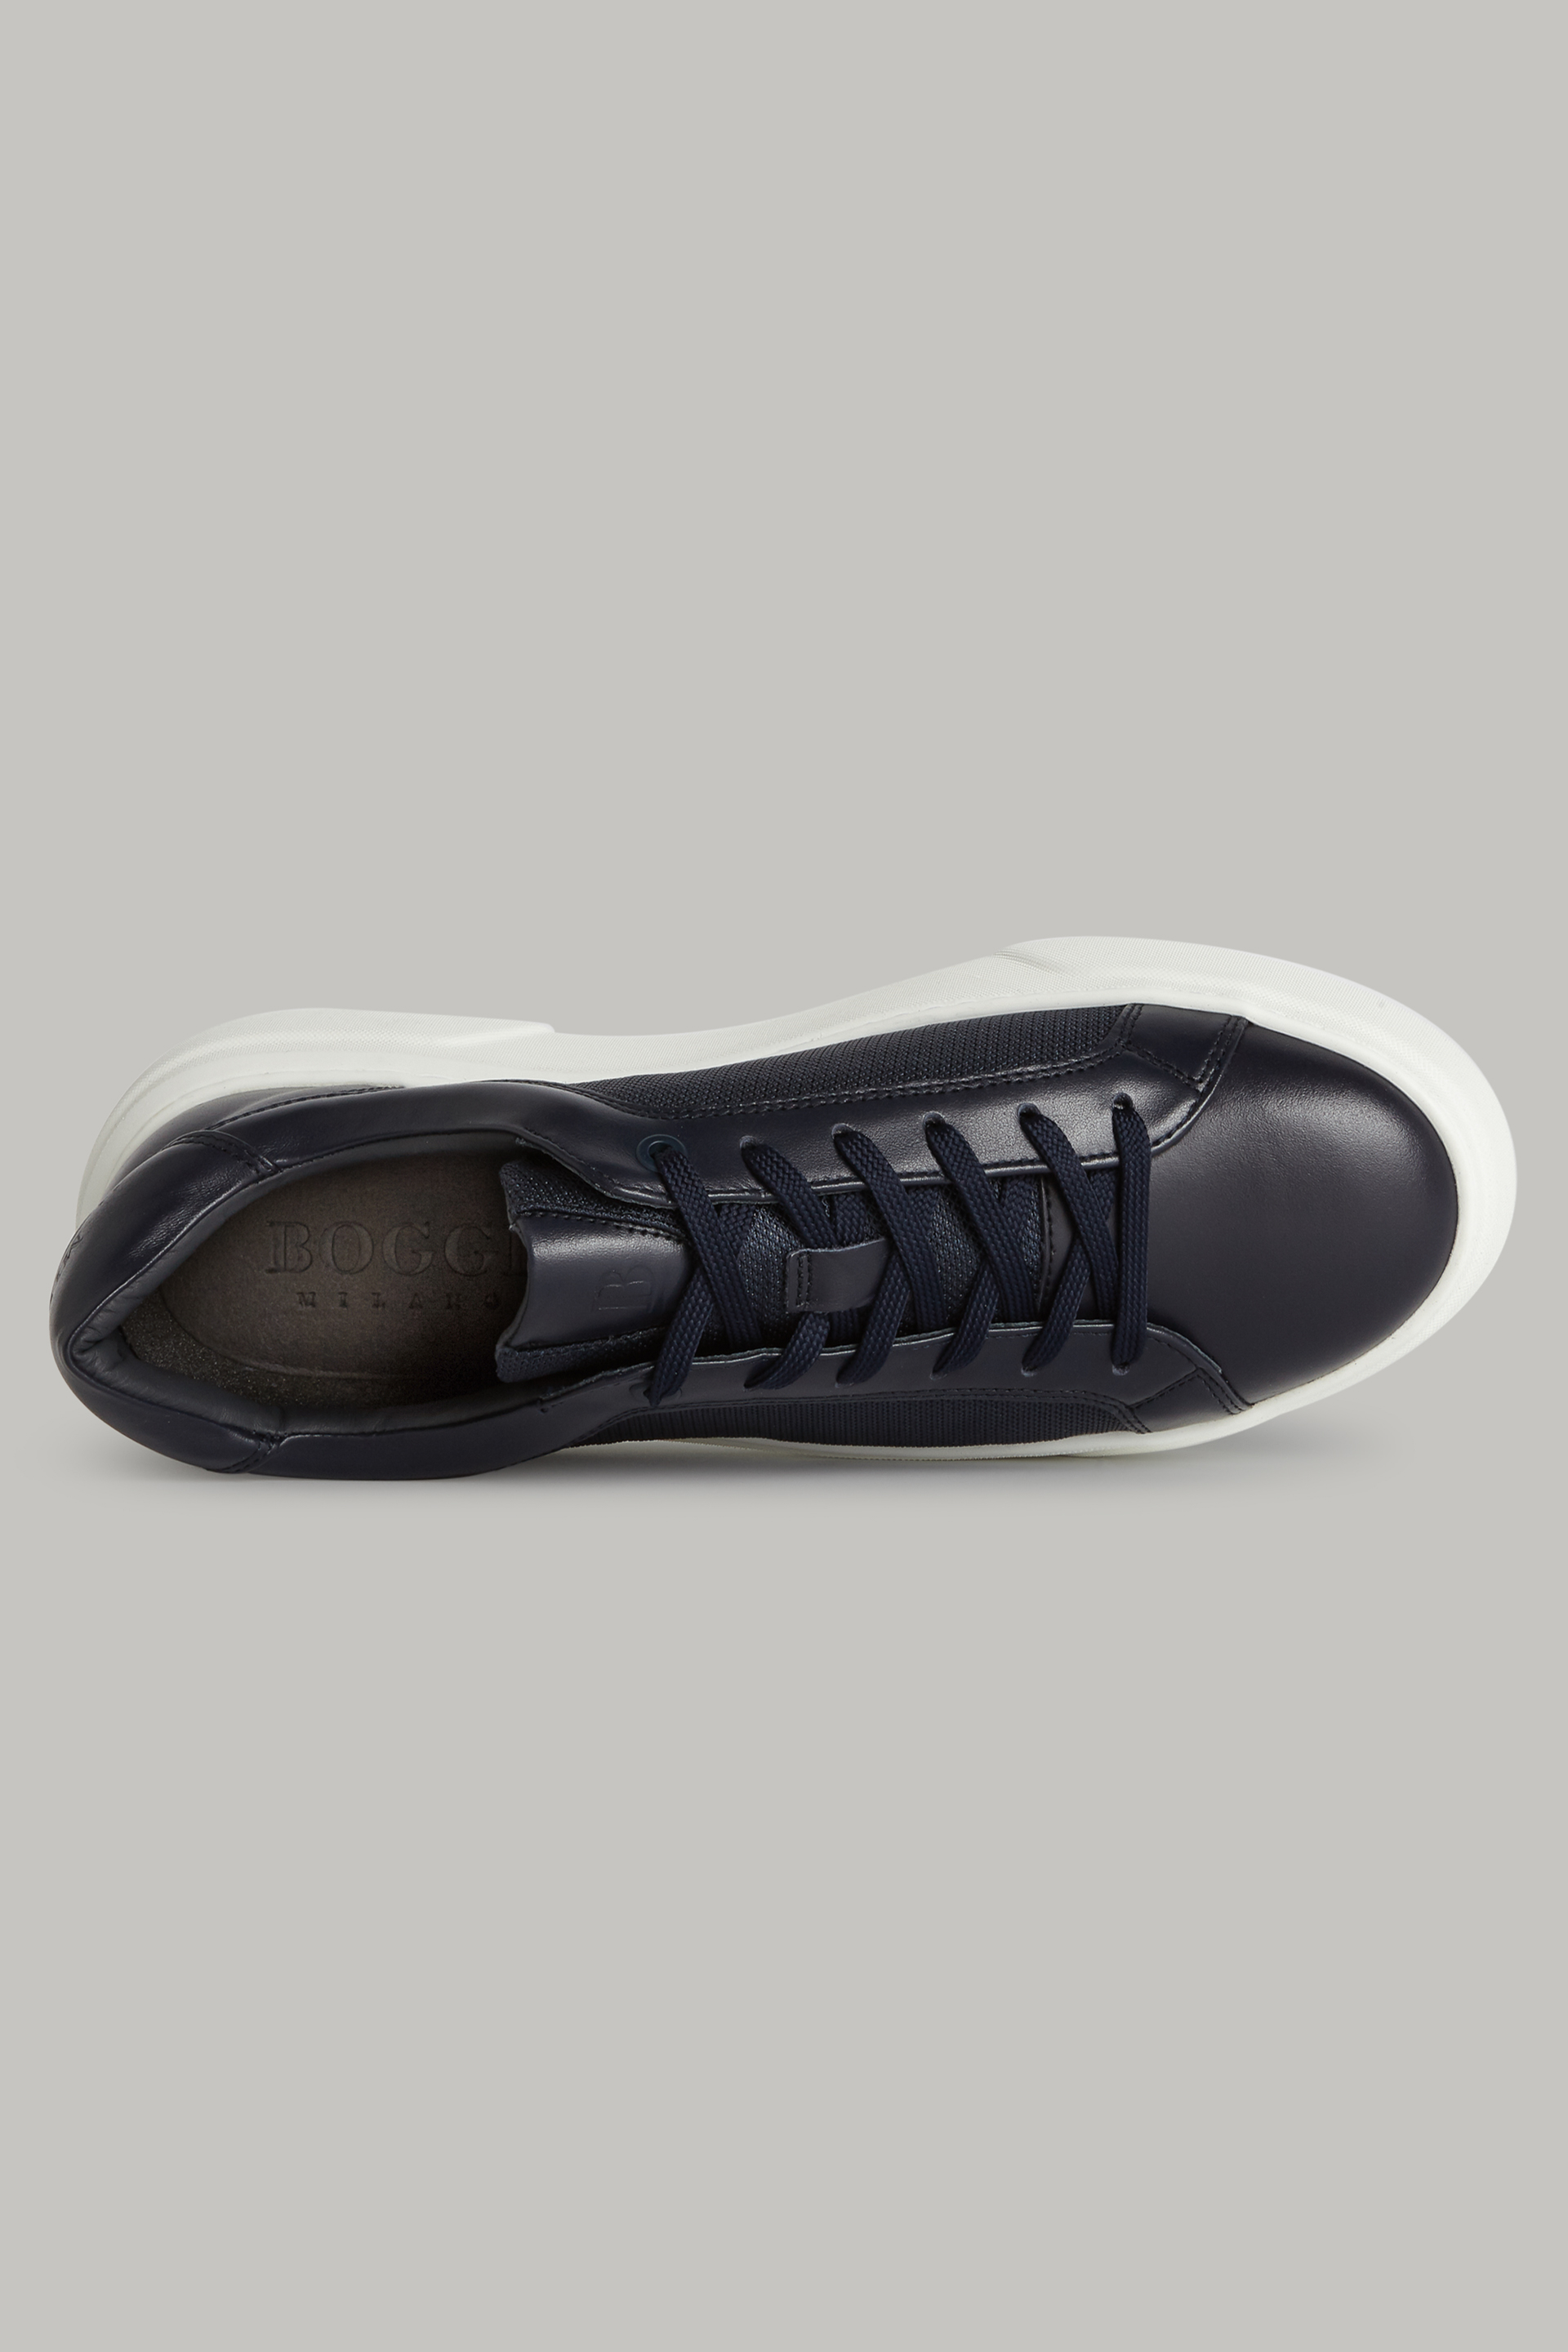 CH029 Men's Navy Blue Casual Sneaker Boots